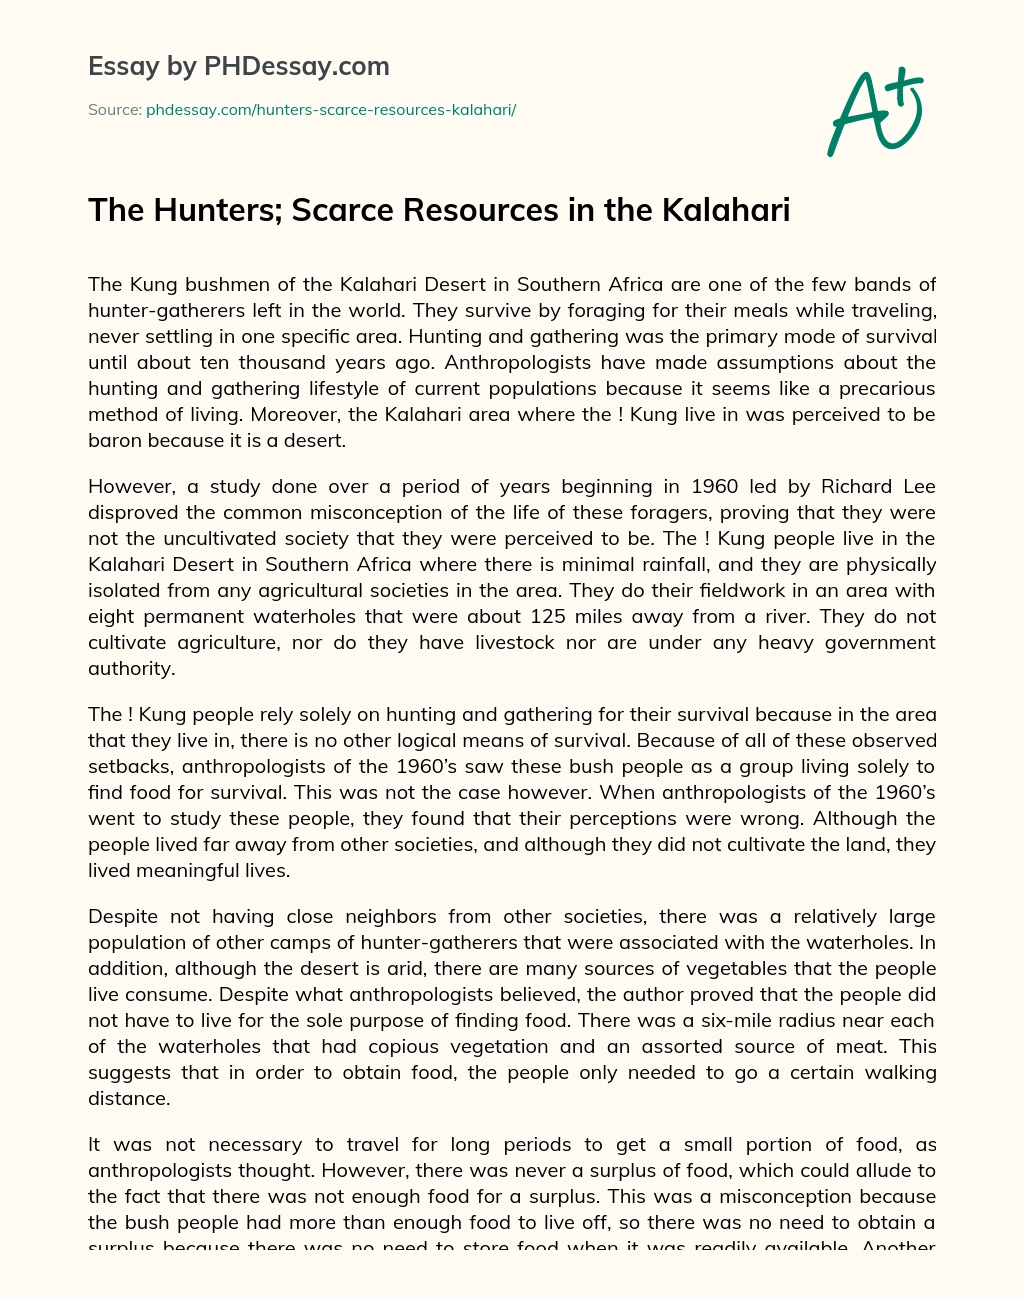 The Hunters; Scarce Resources in the Kalahari essay